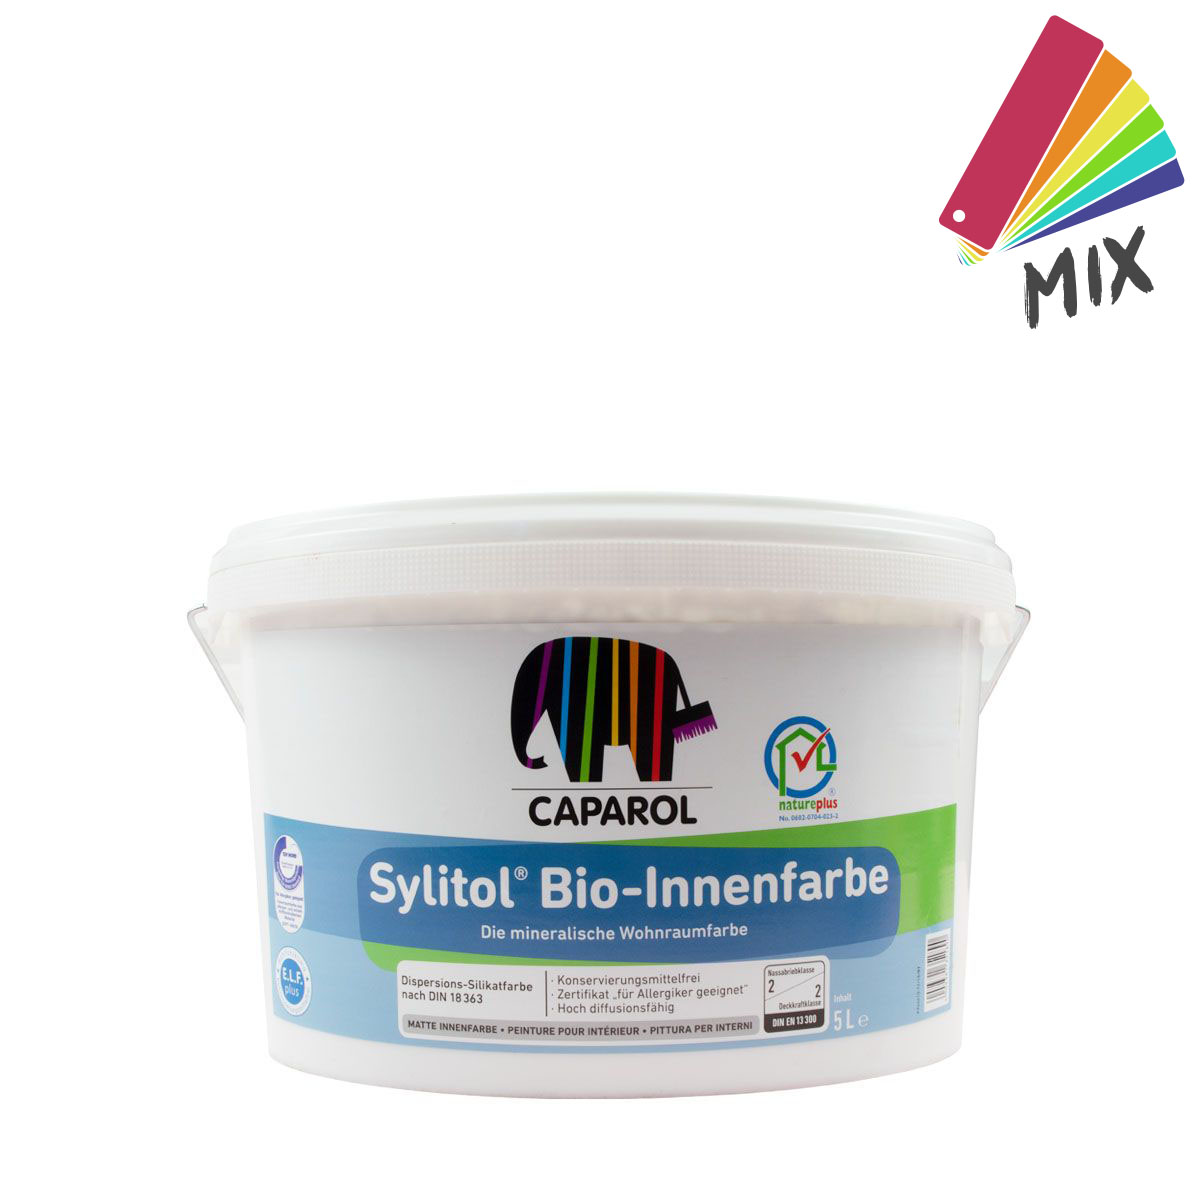 Caparol Sylitol Bio-Innenfarbe 5L MIX PG S, Allergiker geeignet